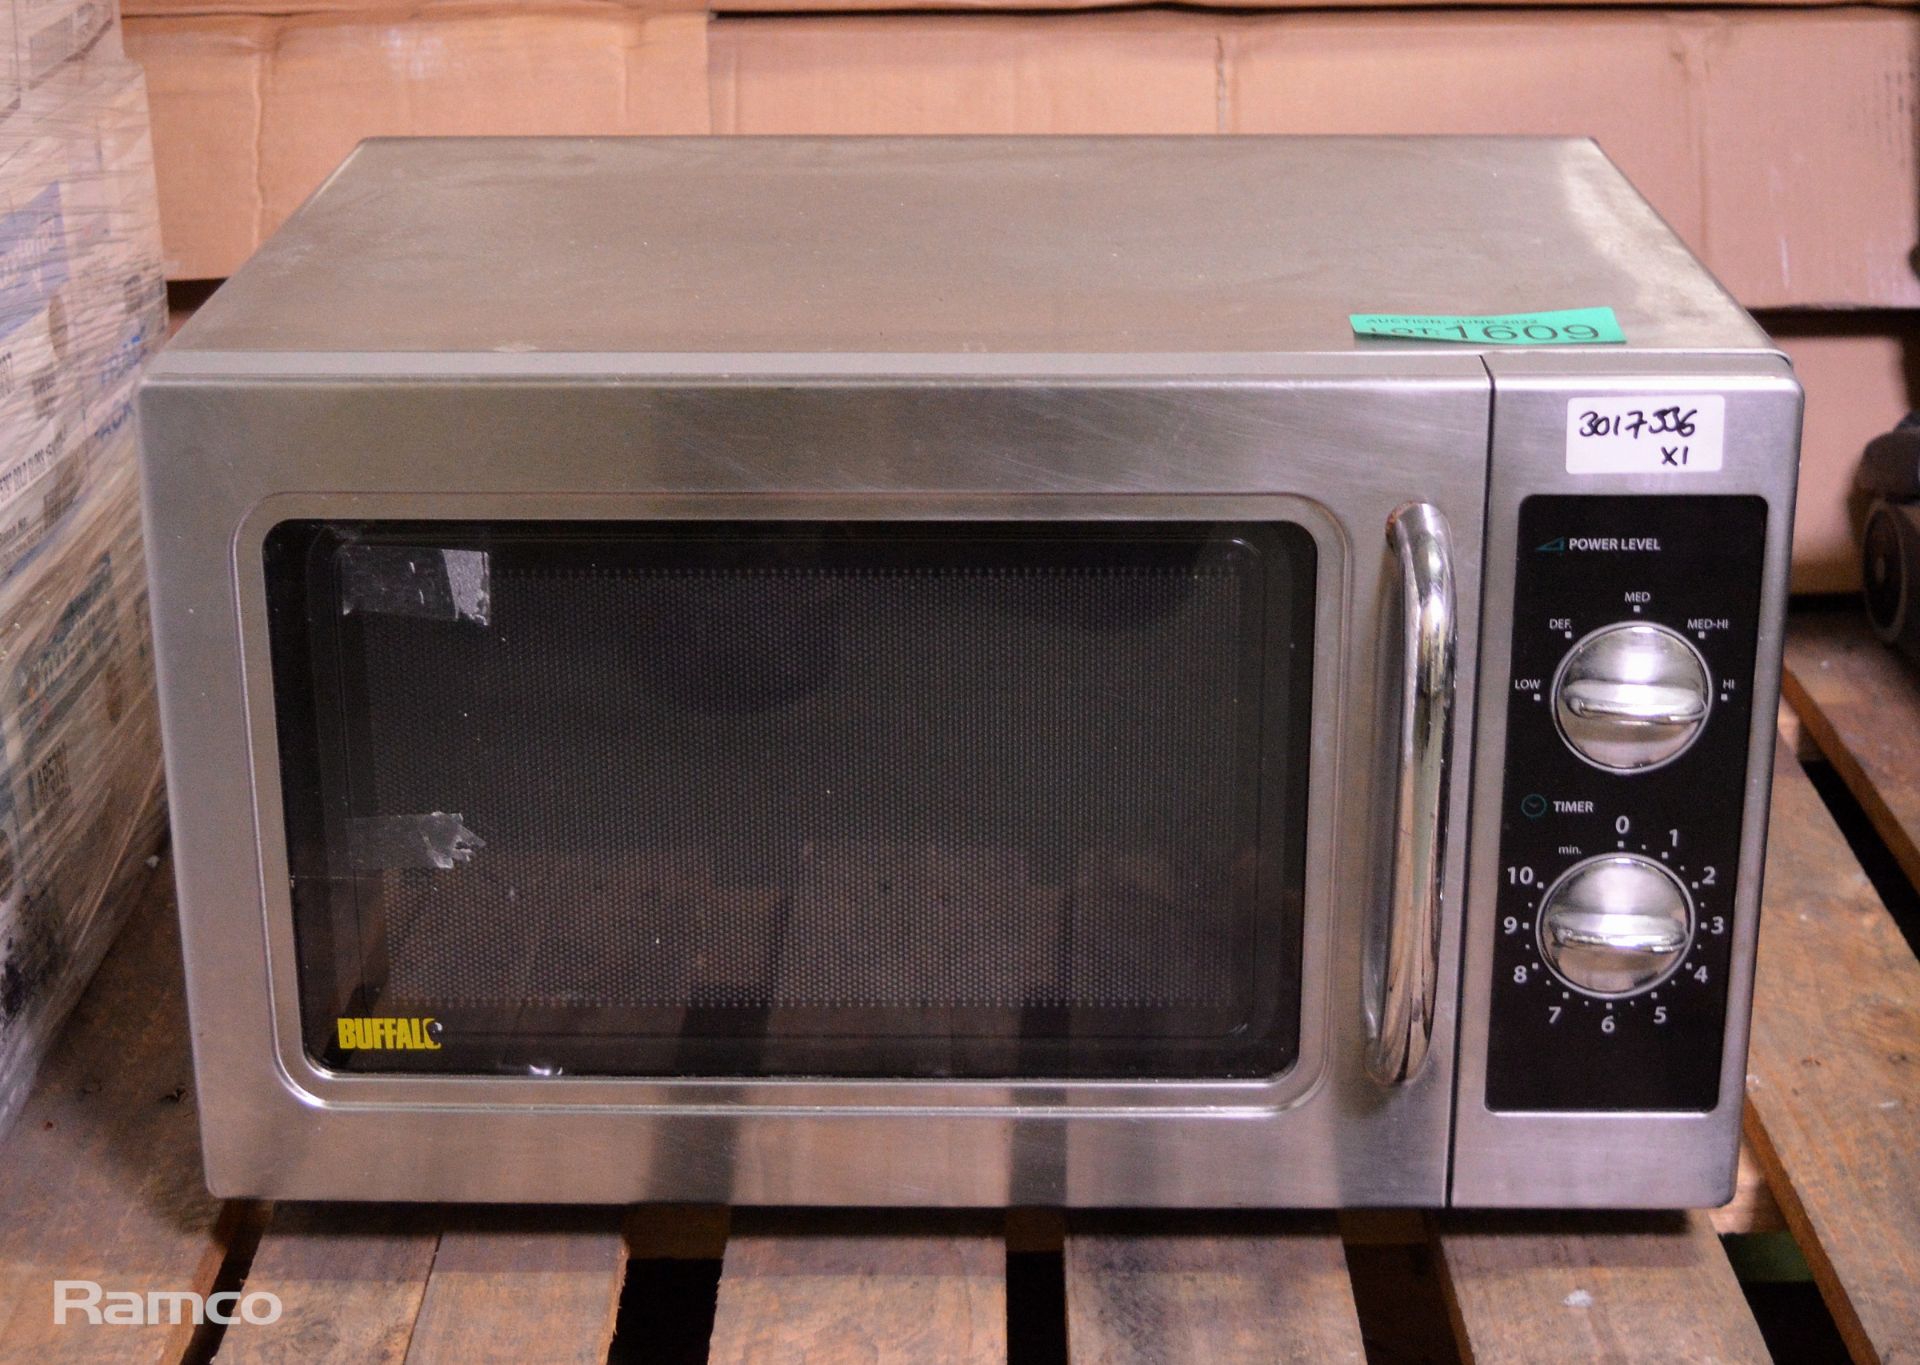 Buffalo CF358 1600w microwave - L55 x D45 x H35cm